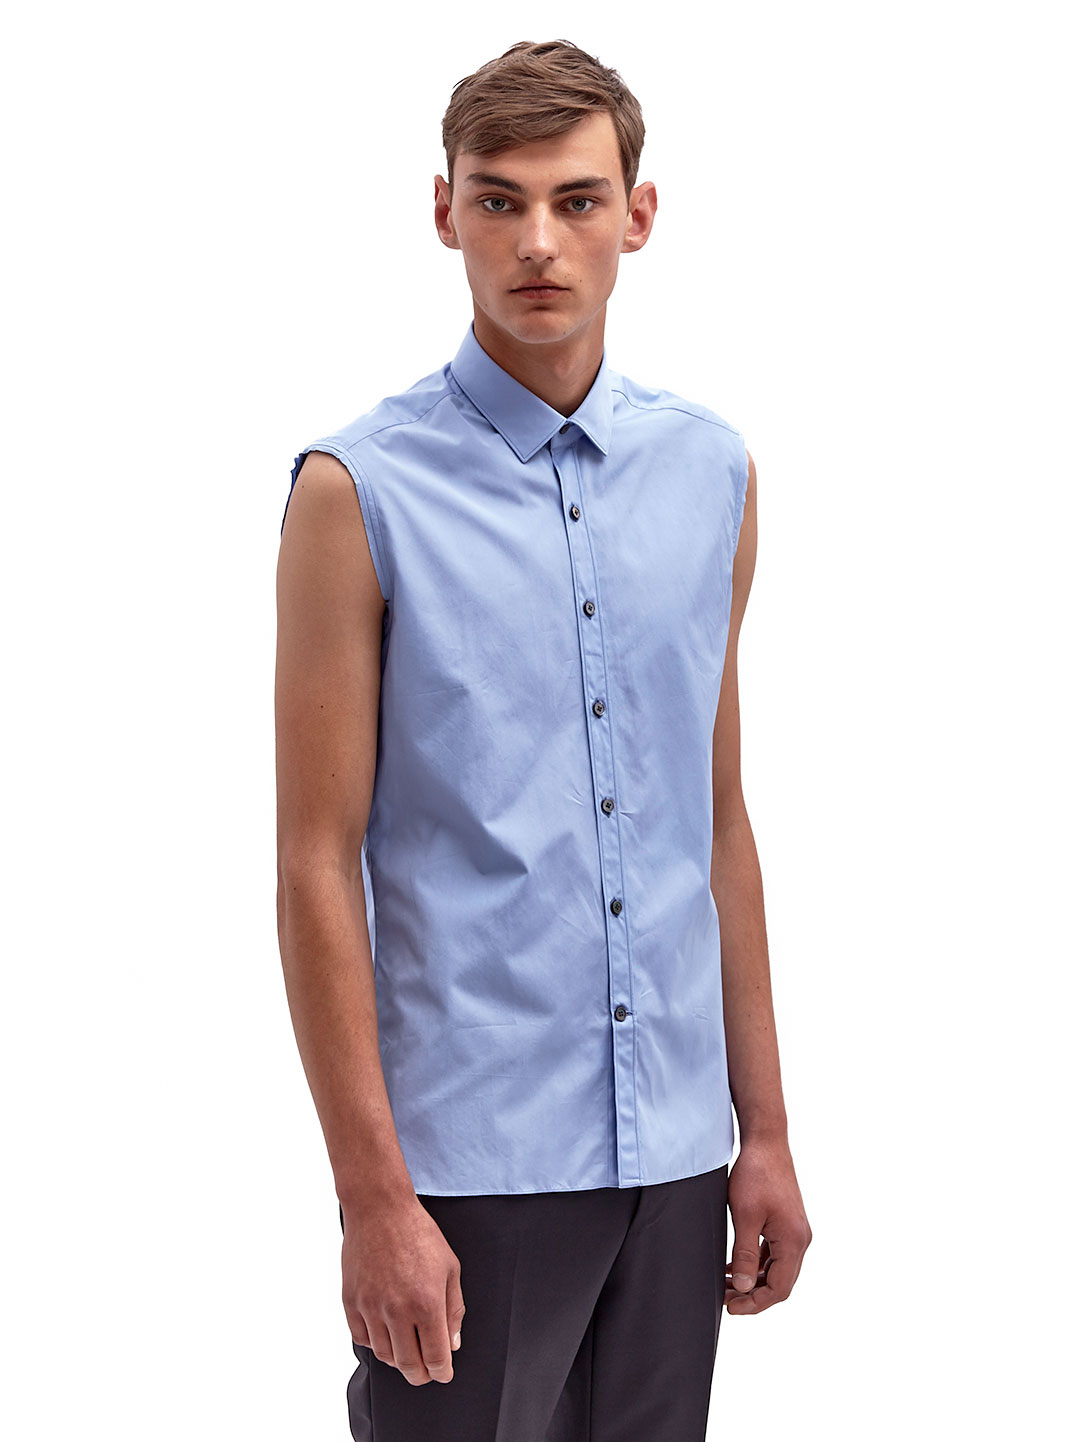 Lanvin Cotton Mens Sleeveless Shirt in Blue for Men - Lyst